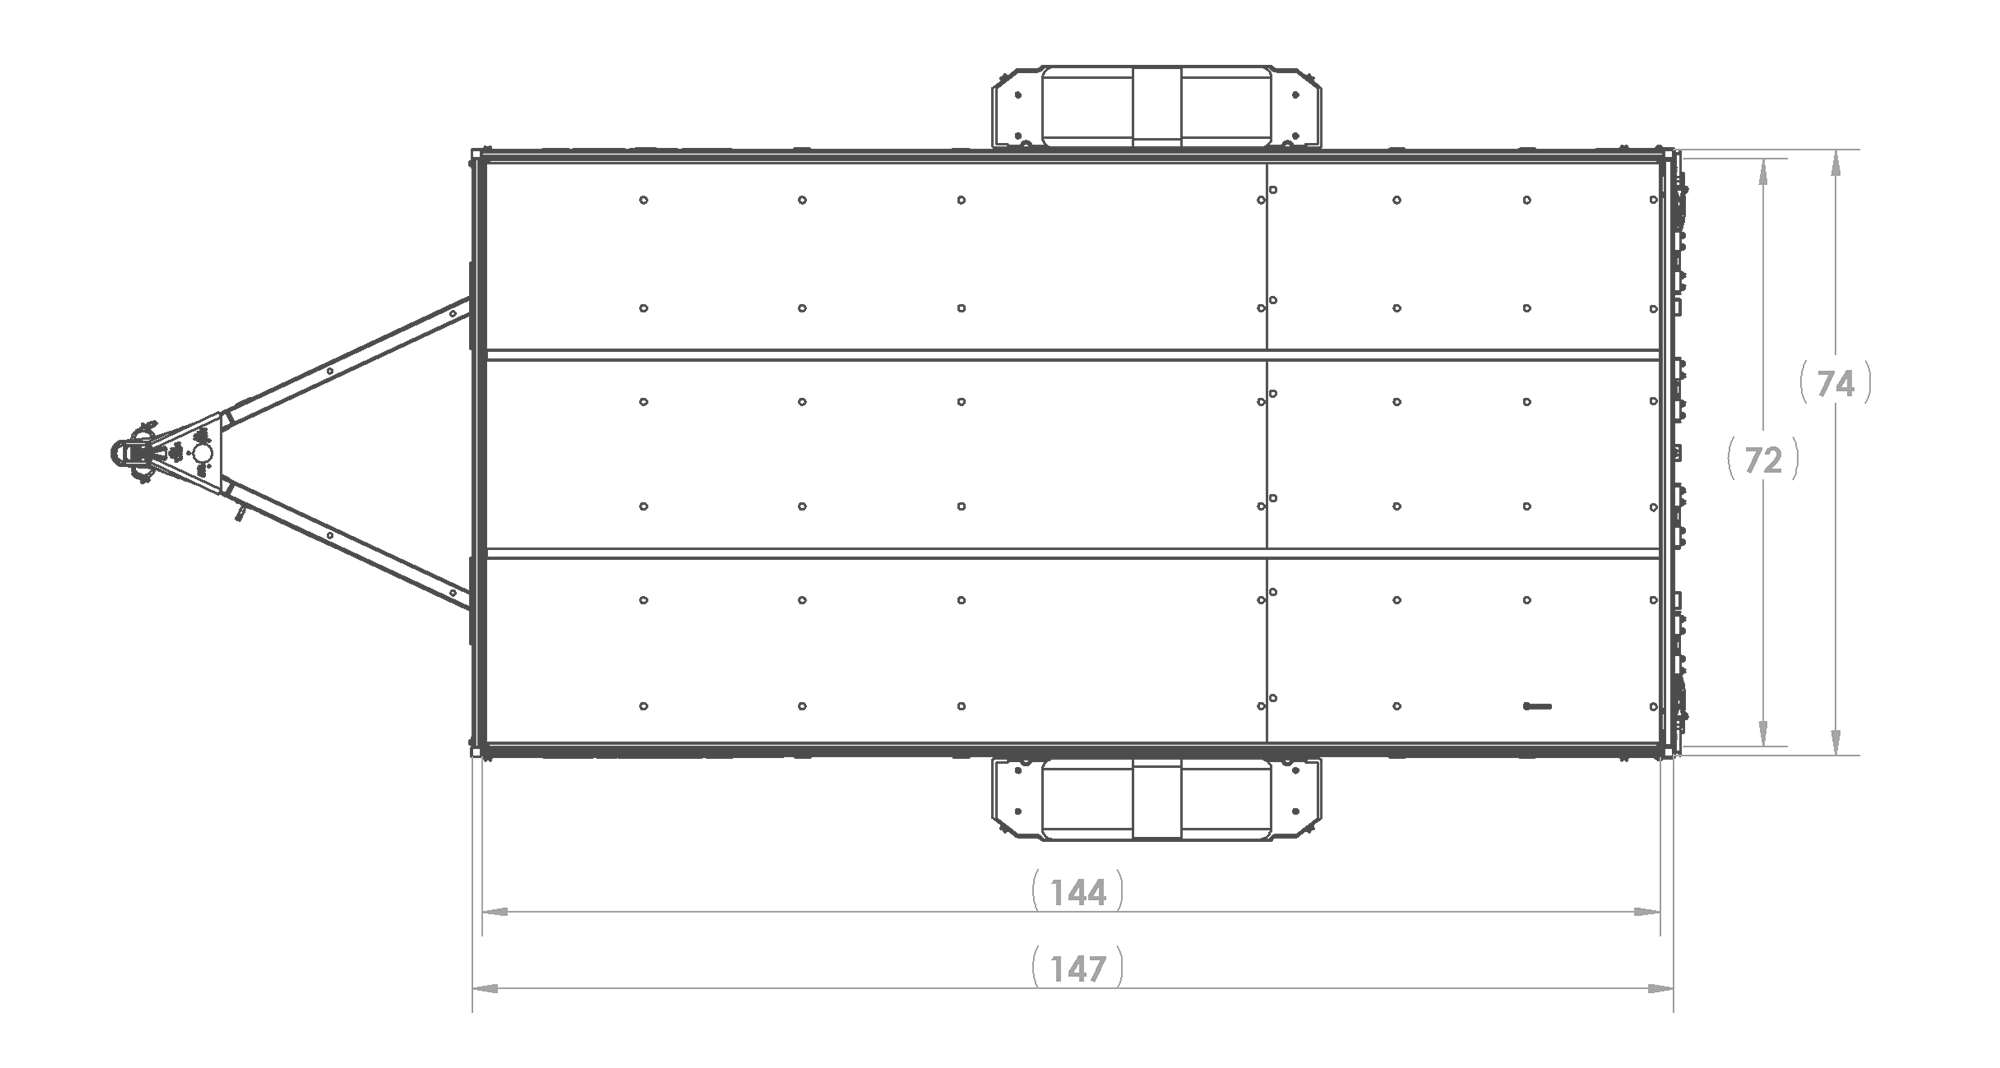 Karavan Trailer's 6x12ft. Aluminum Utility Trailer, Top View Measurements